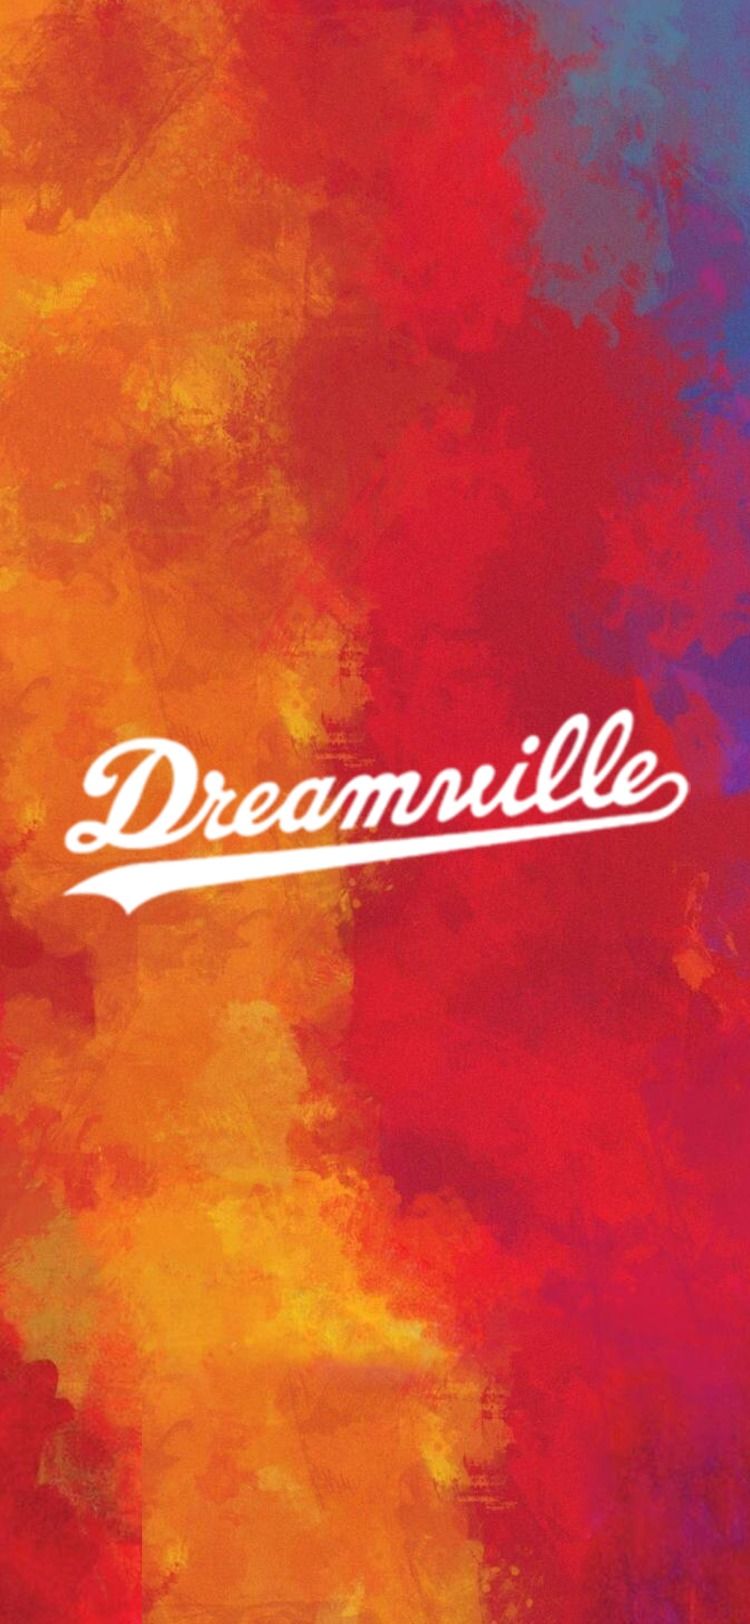 33 Dreamville Wallpaper On Wallpapersafari